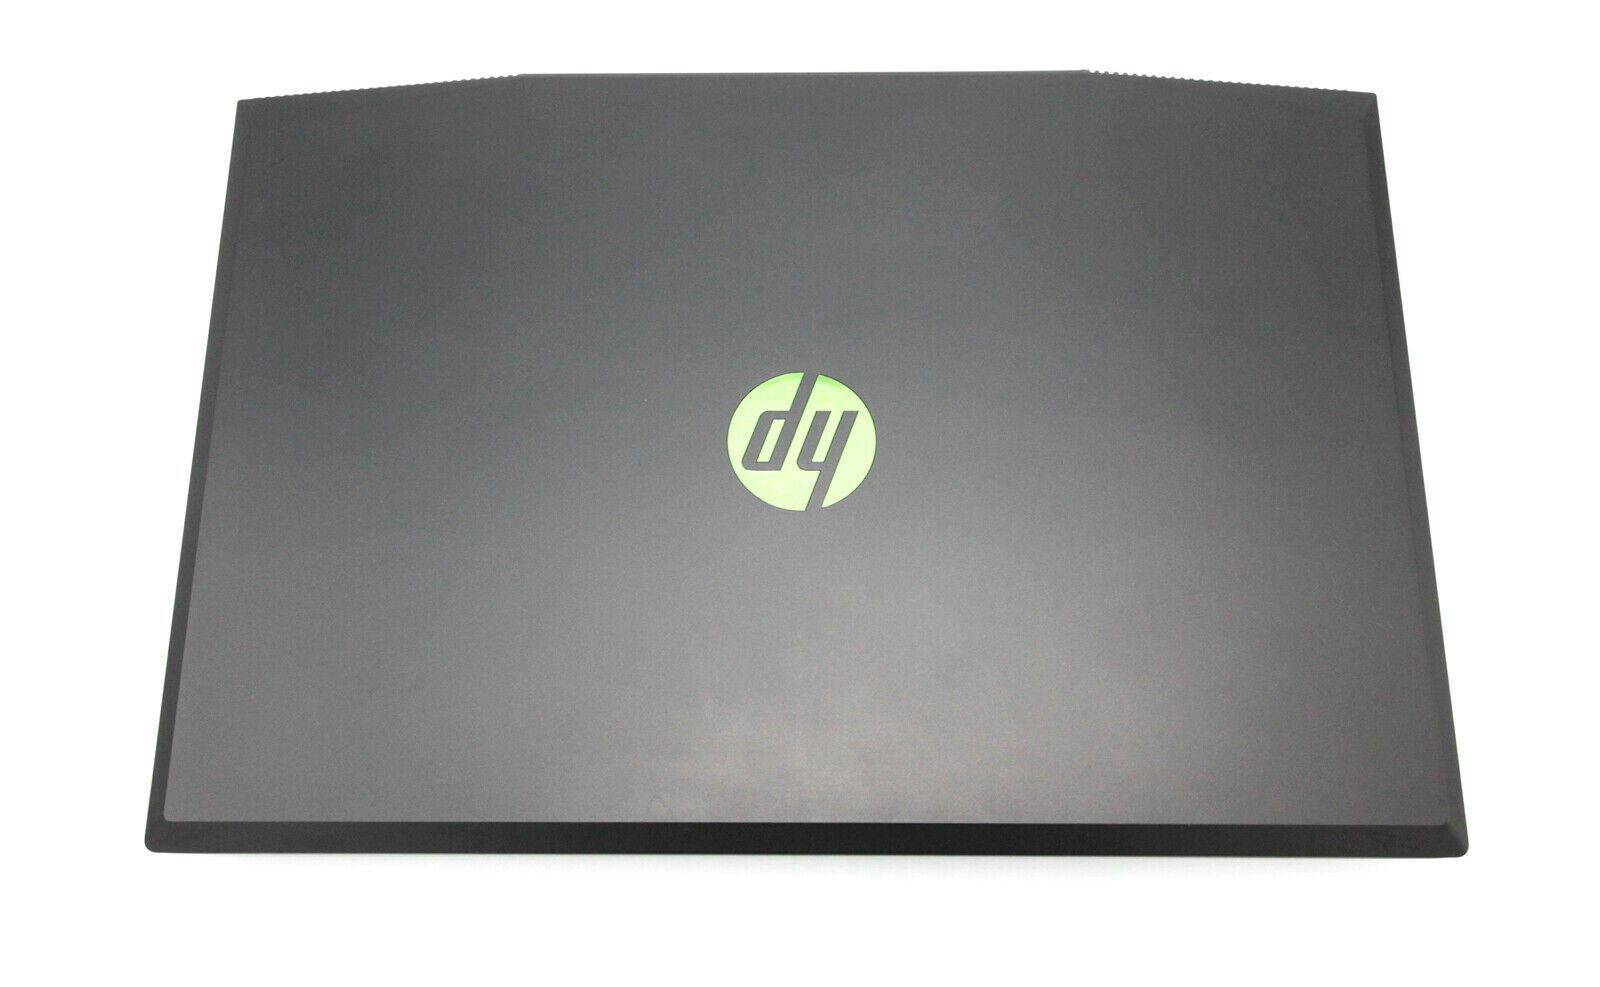 HP Pavilion 15 Gaming Laptop: GTX 1060, Core i7-8750H, 128GB+1TB - CruiseTech